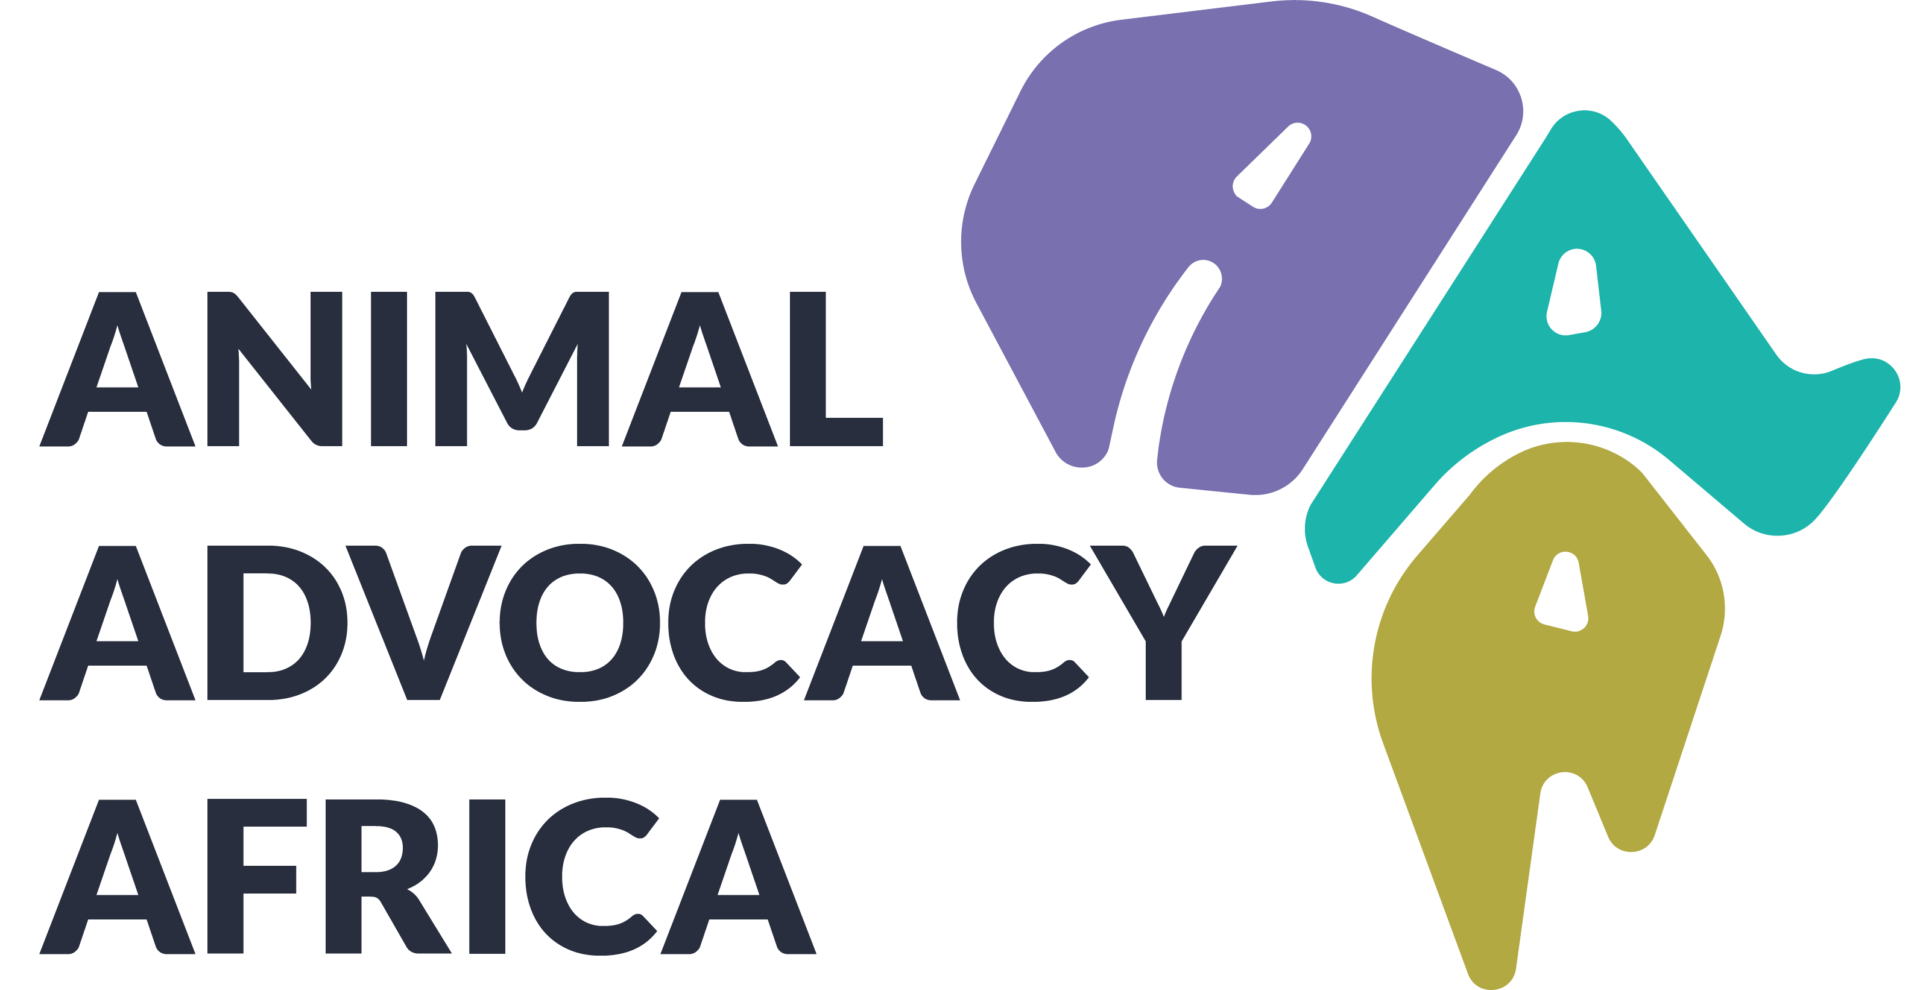 Animal Advocacy Africa